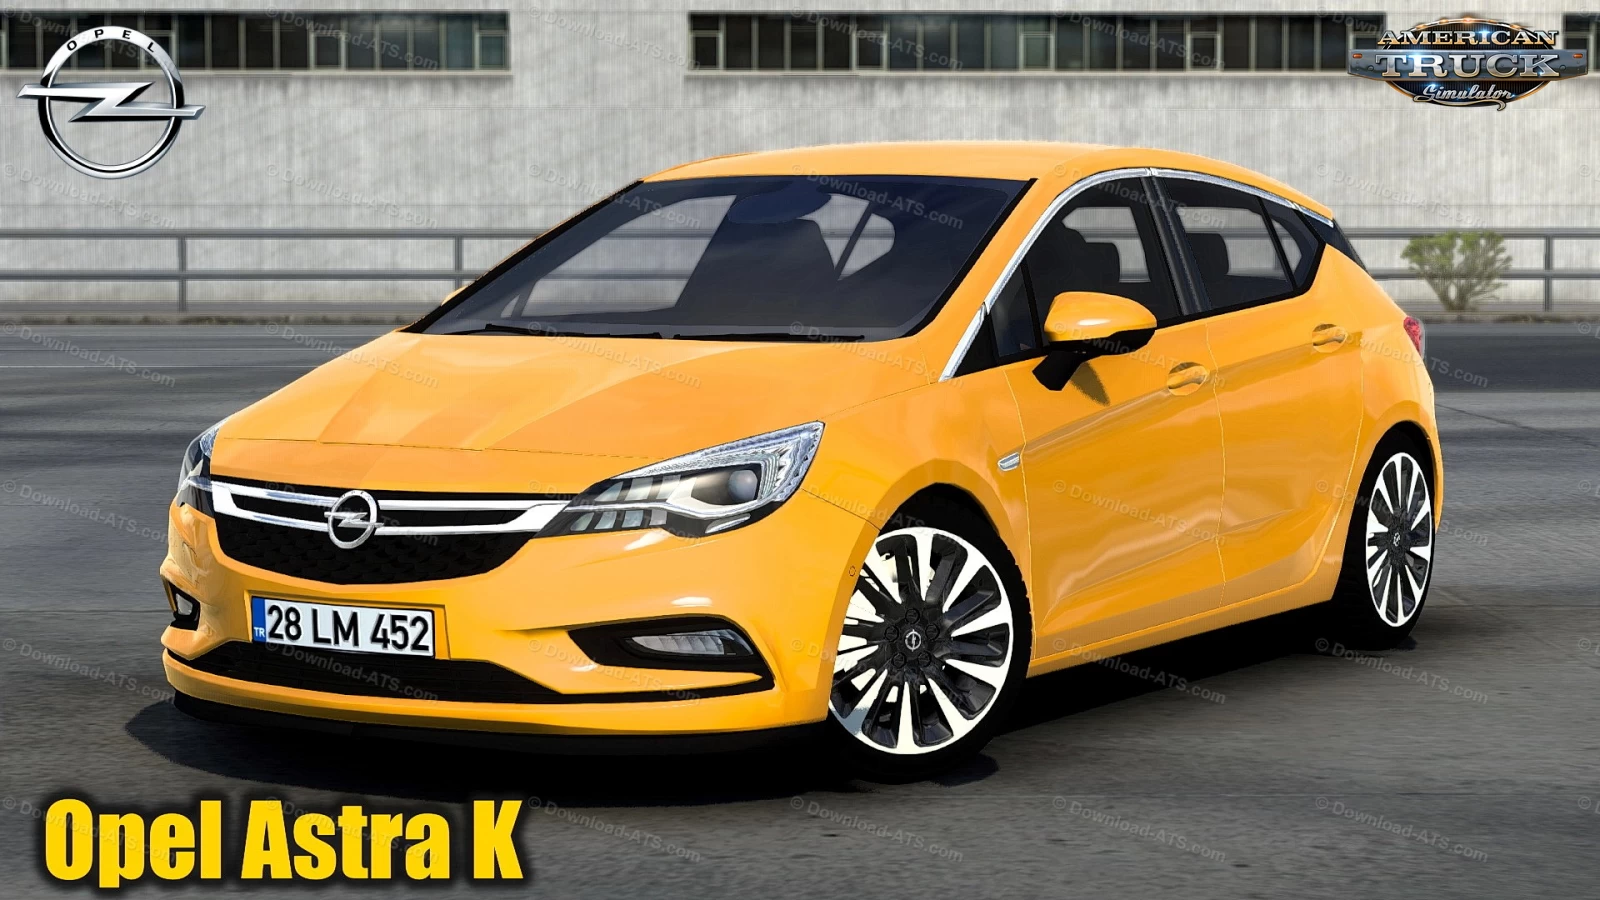 Opel Astra K + Interior v2.2 (1.46.x) for ATS